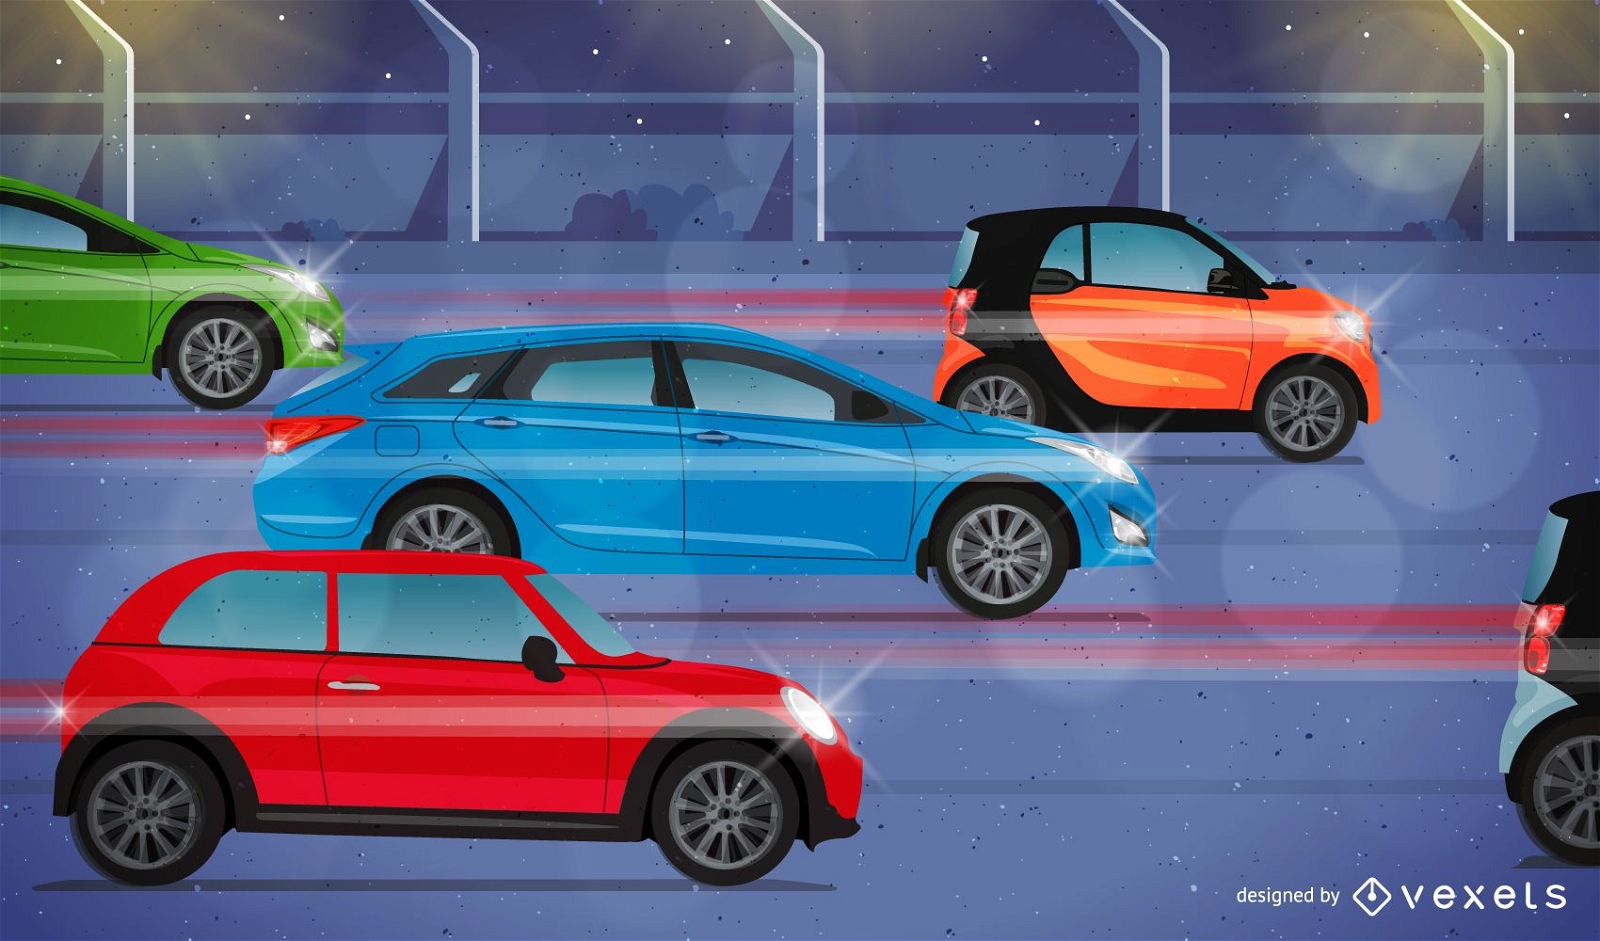 Cars on a road illustration